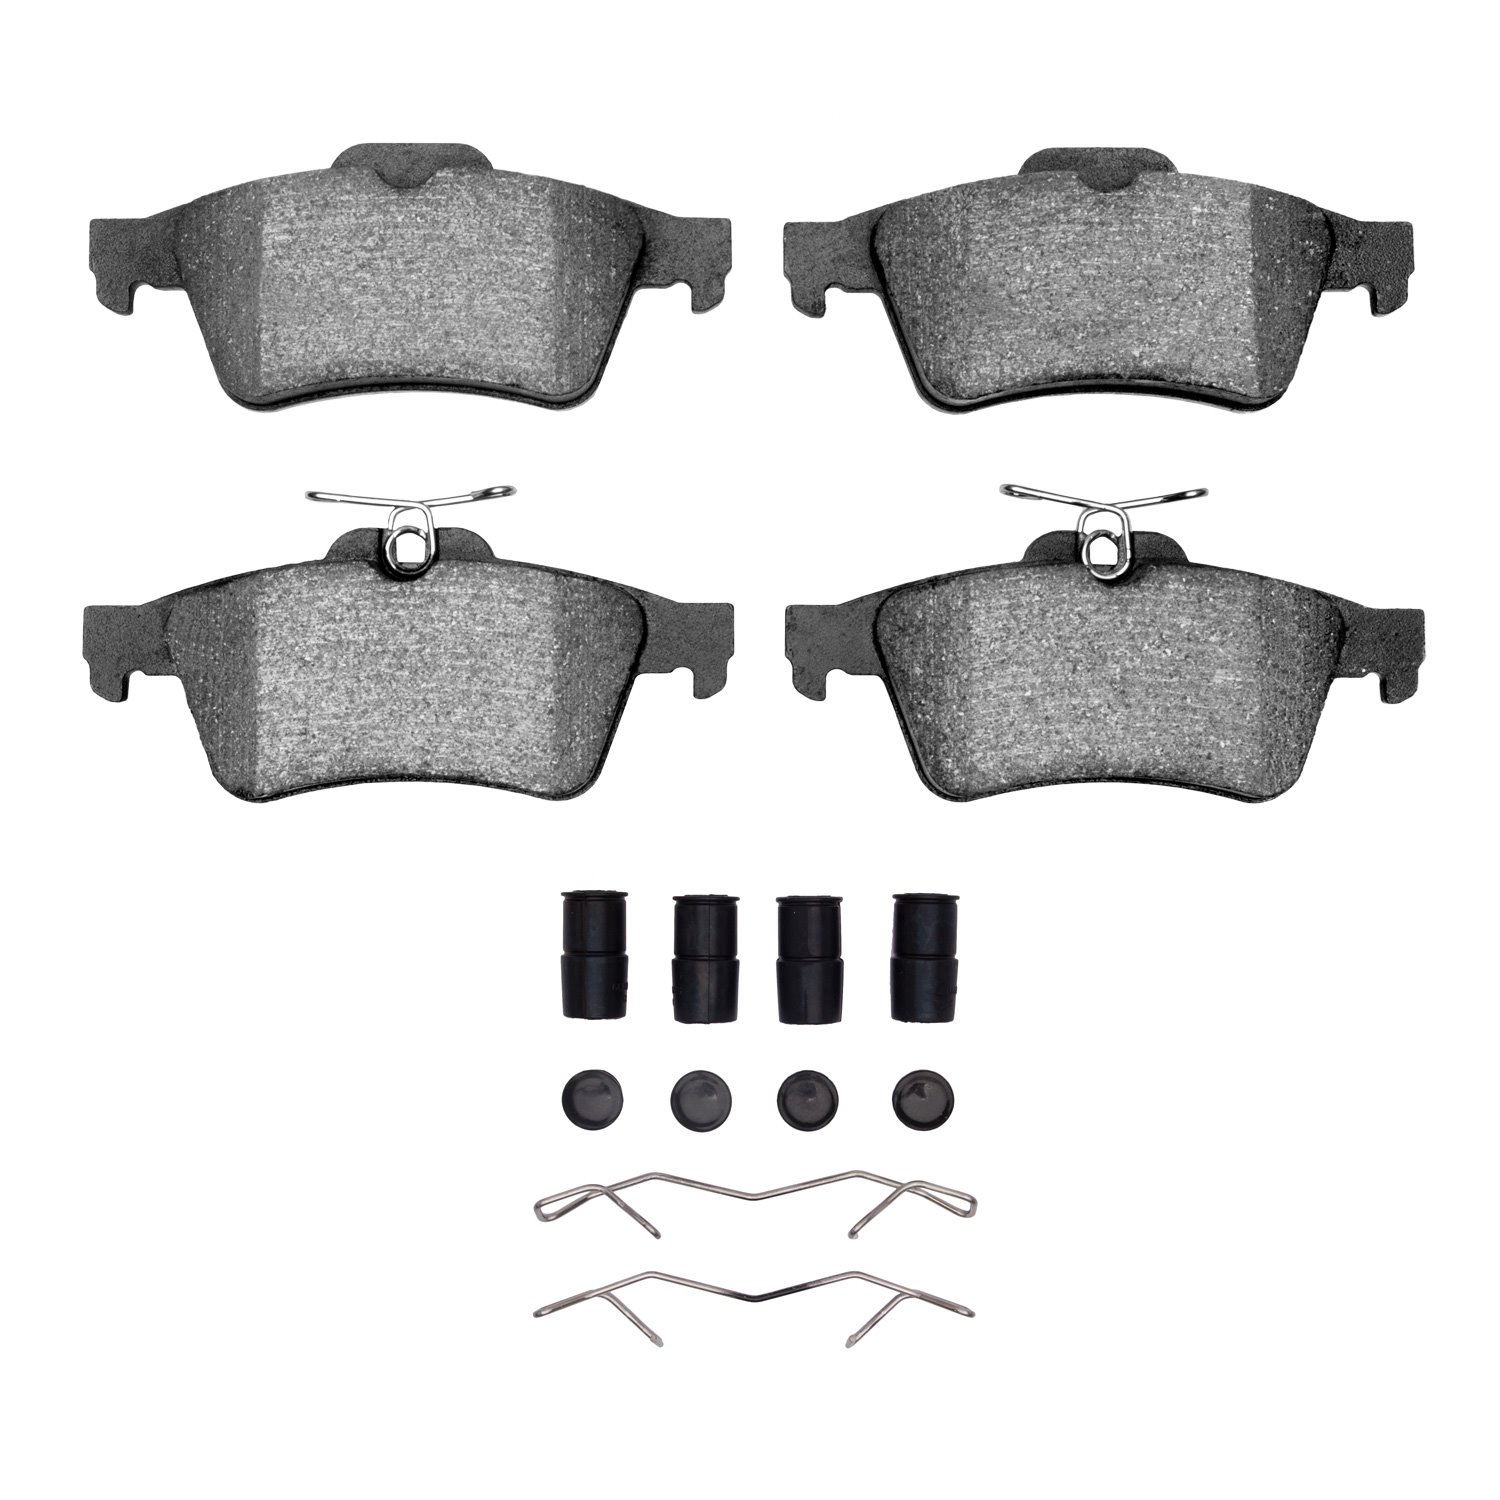 1552-1095-01 5000 Advanced Low-Metallic Brake Pads & Hardware Kit, 2003-2015 Multiple Makes/Models, Position: Rear